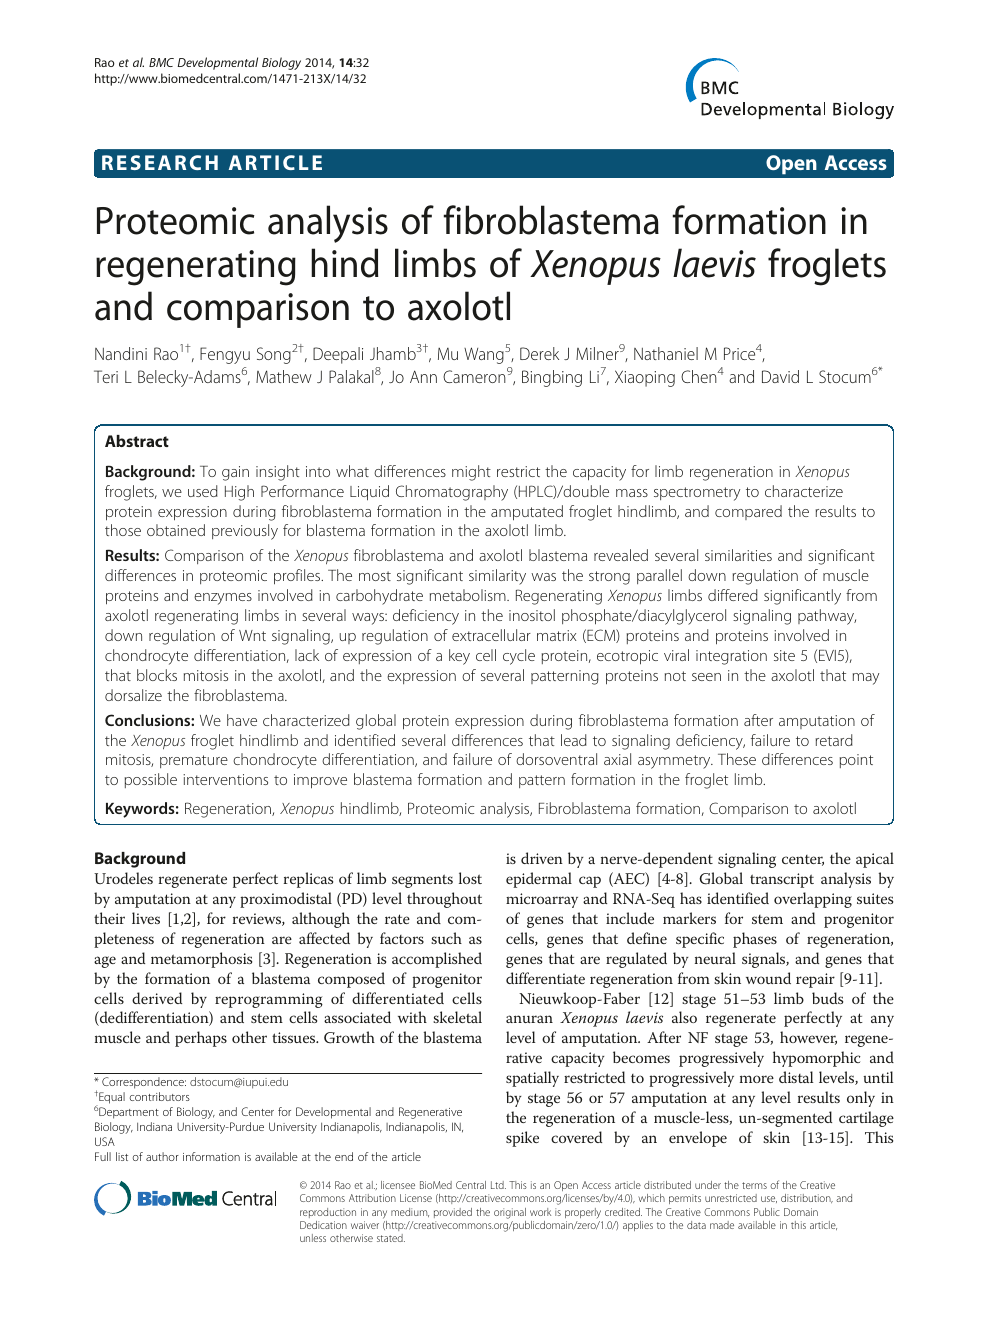 Proteomic Analysis Of Fibroblastema Formation In